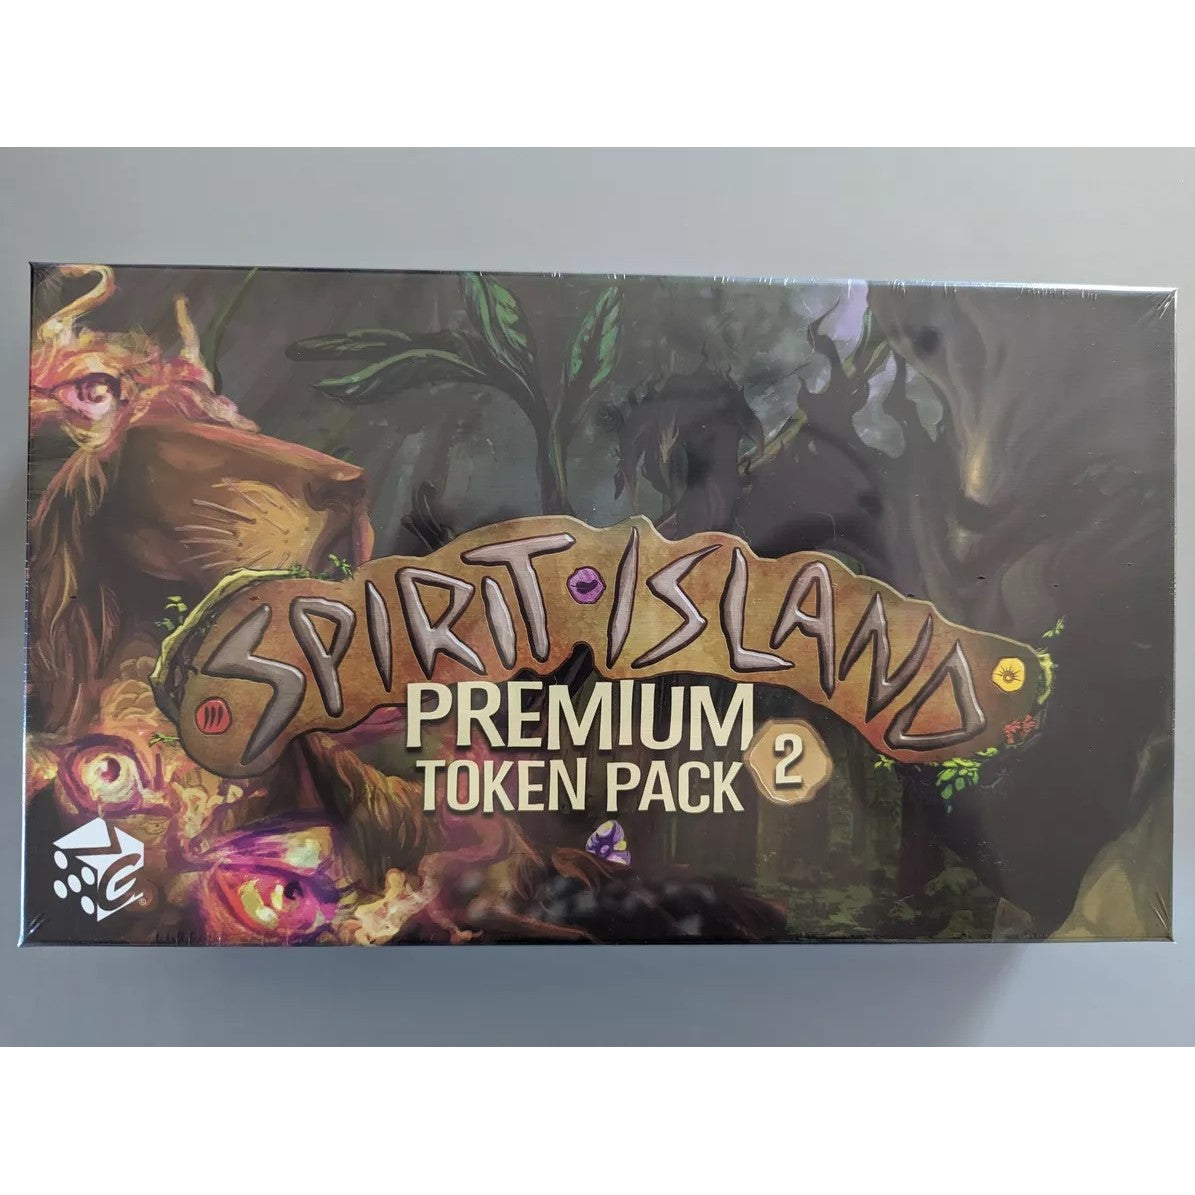 Spirit Island - Premium Token Pack #2